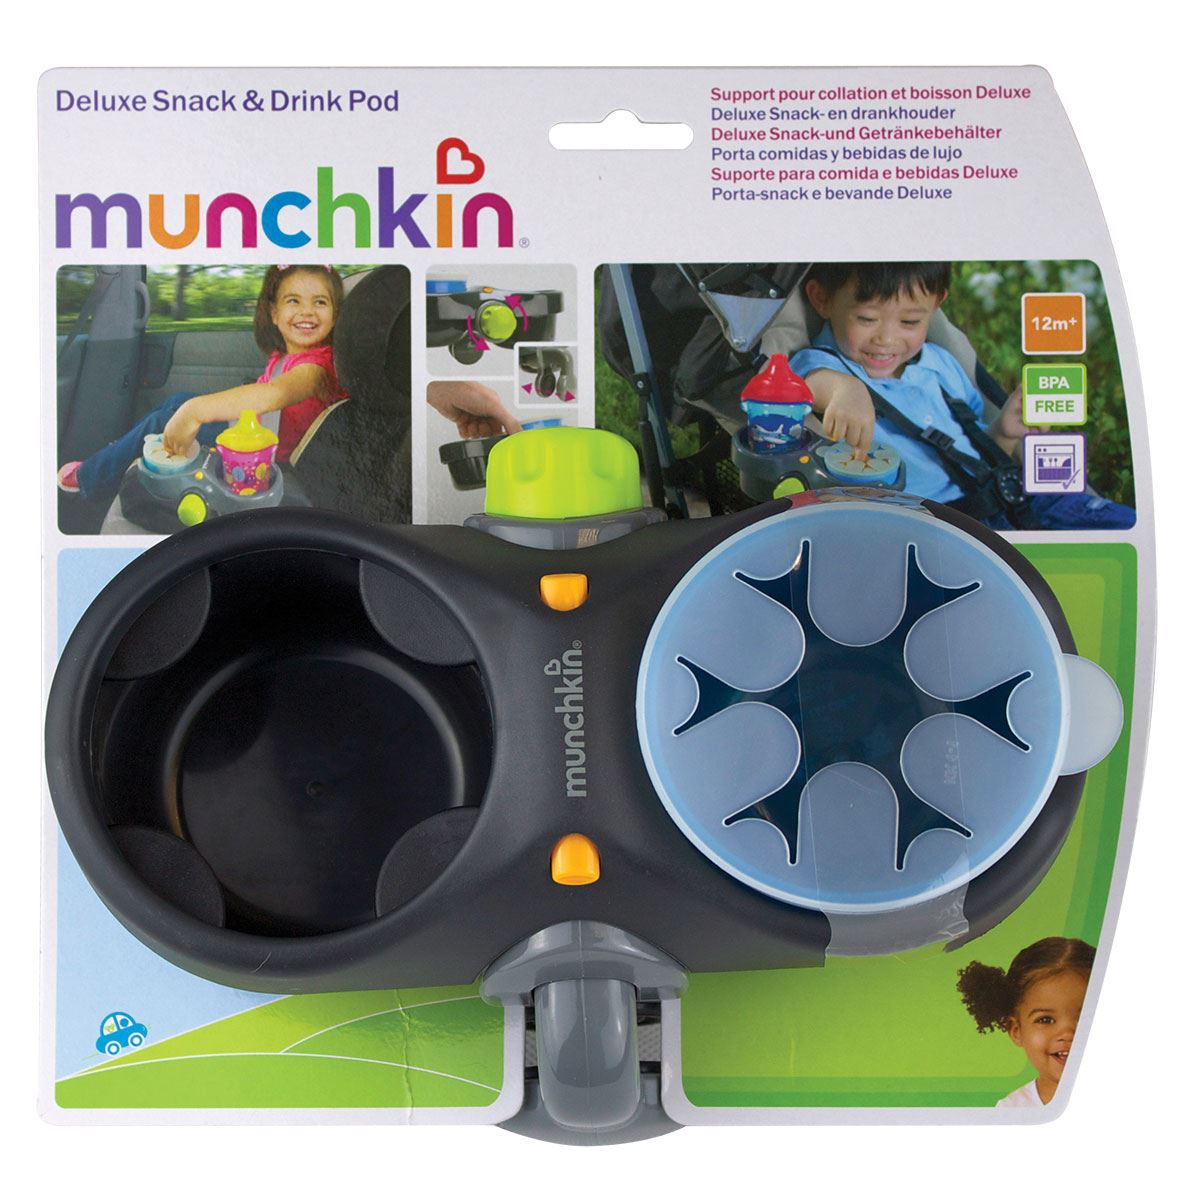 Munchkin Deluxe Snack Pod